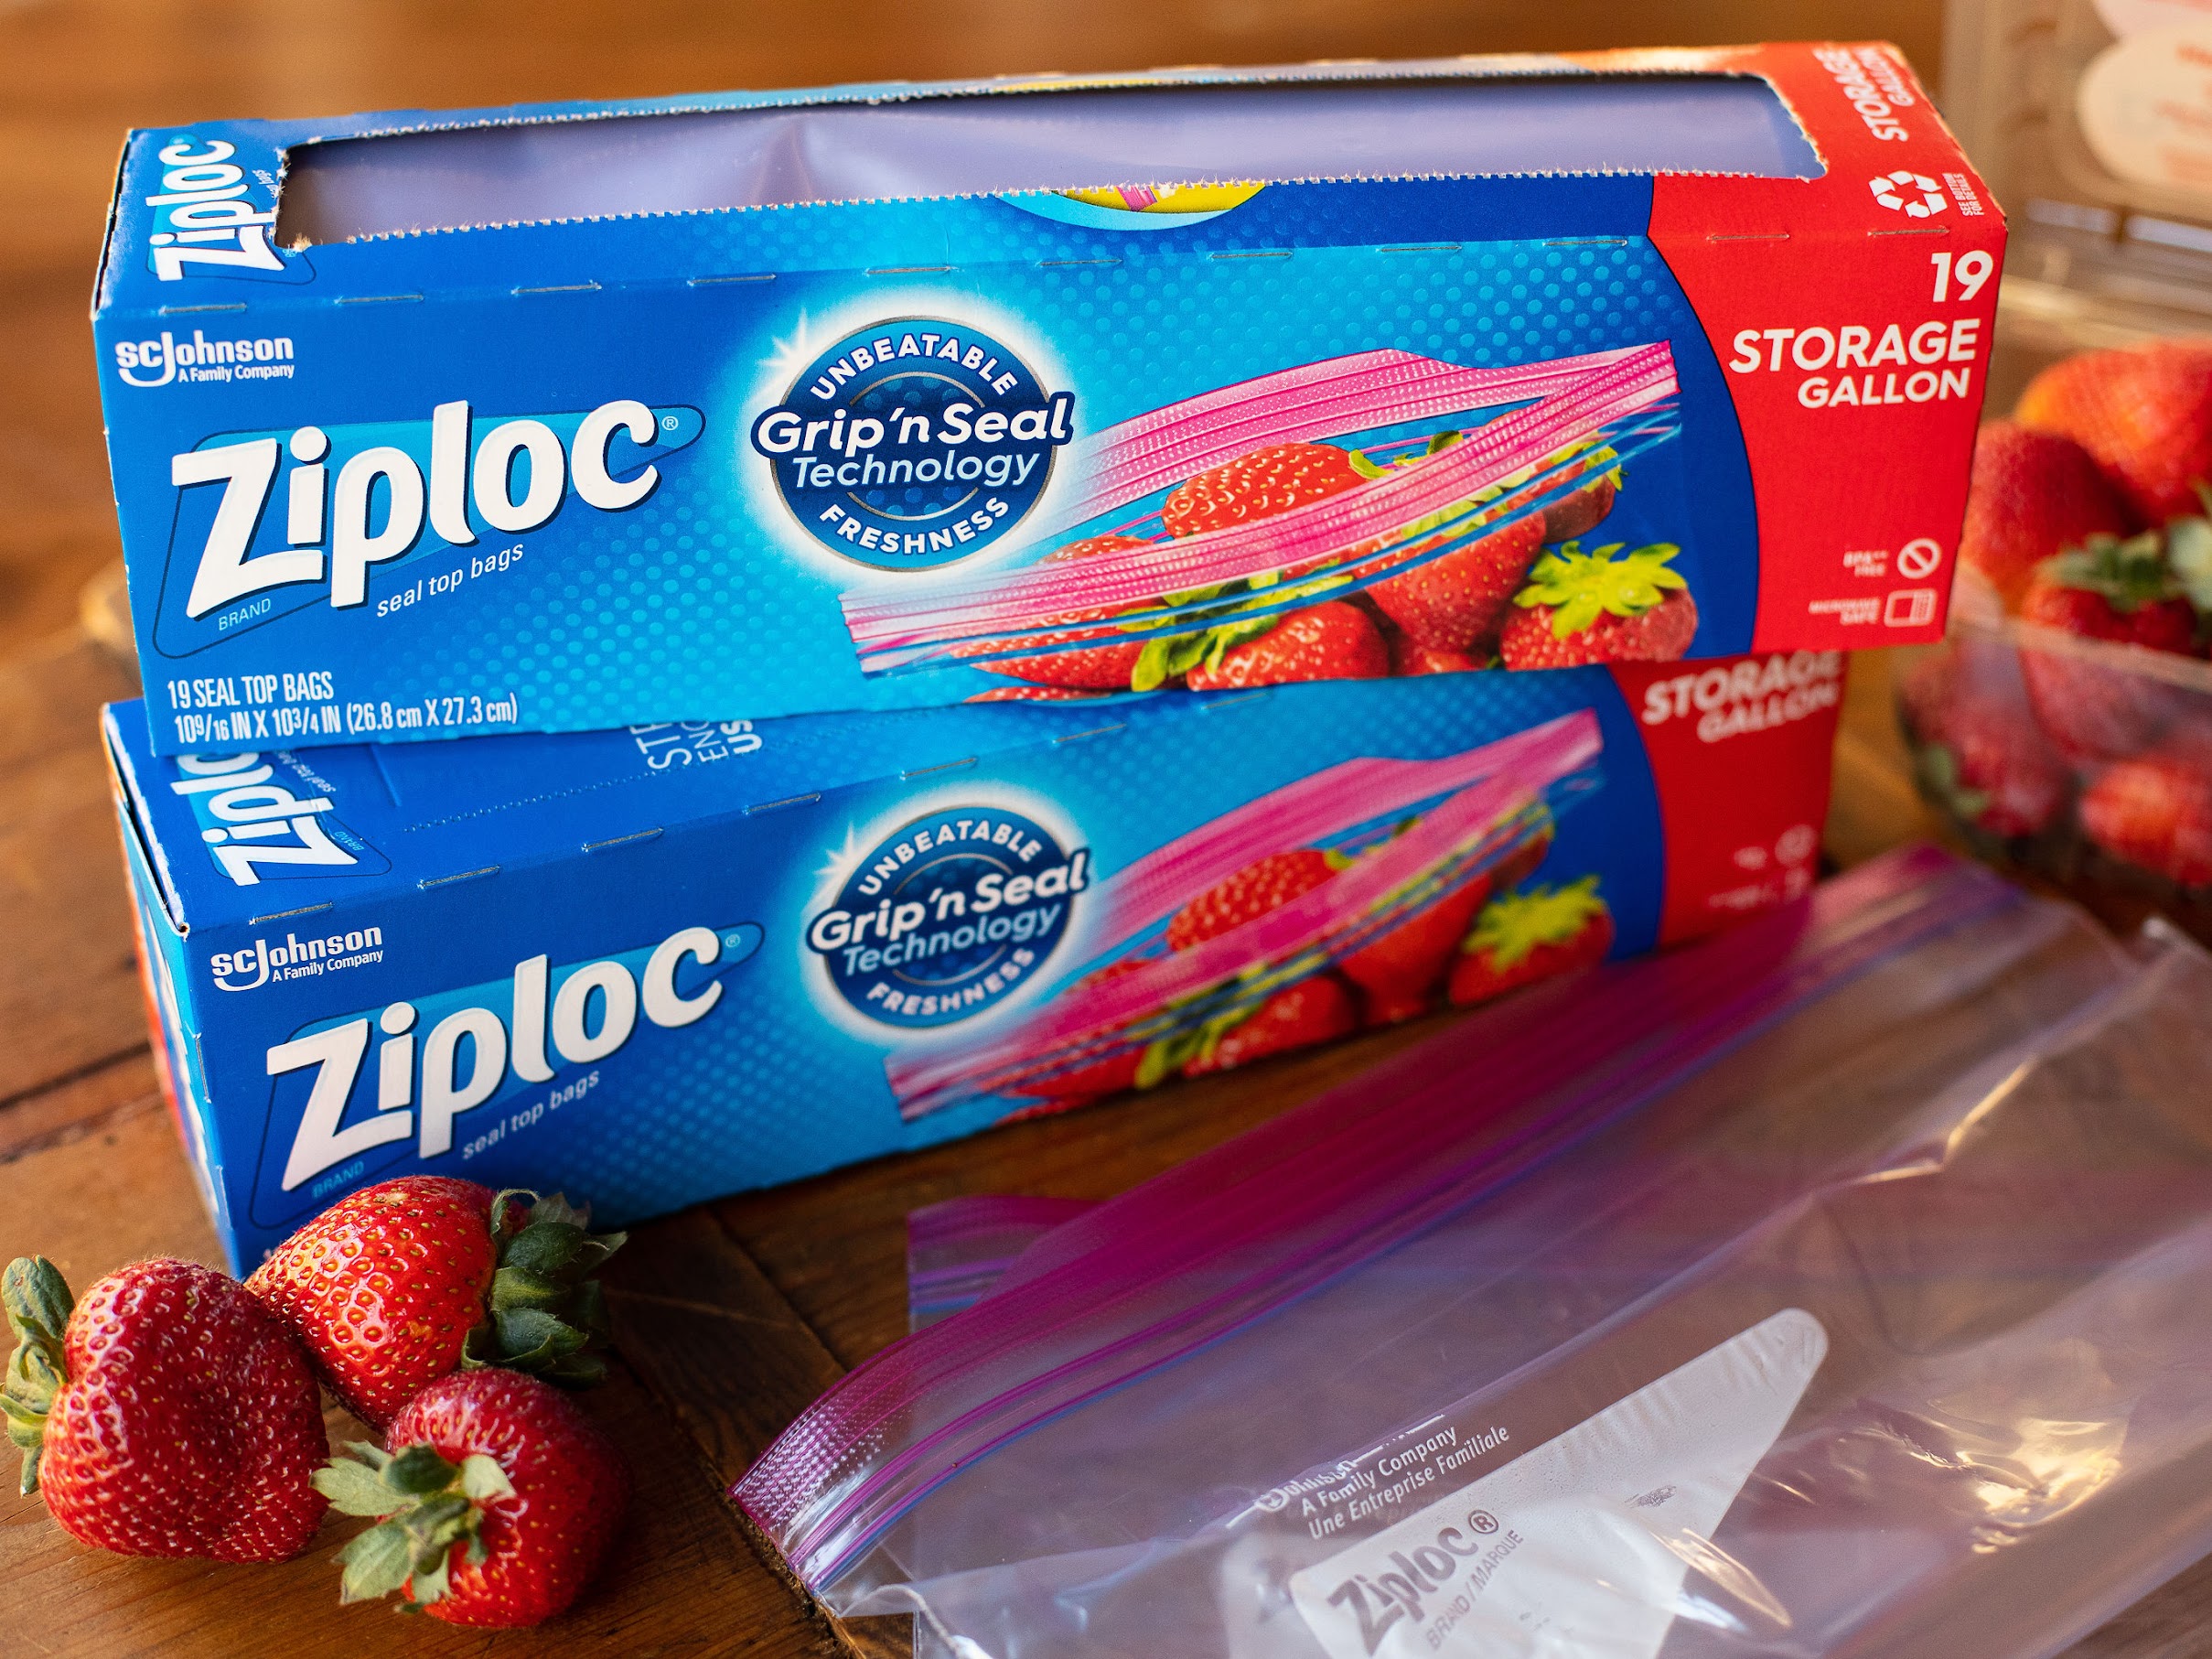 Ziploc Bags As Low As $2.20 At Publix – Plus Get A Deal On Ziploc Slider Bags